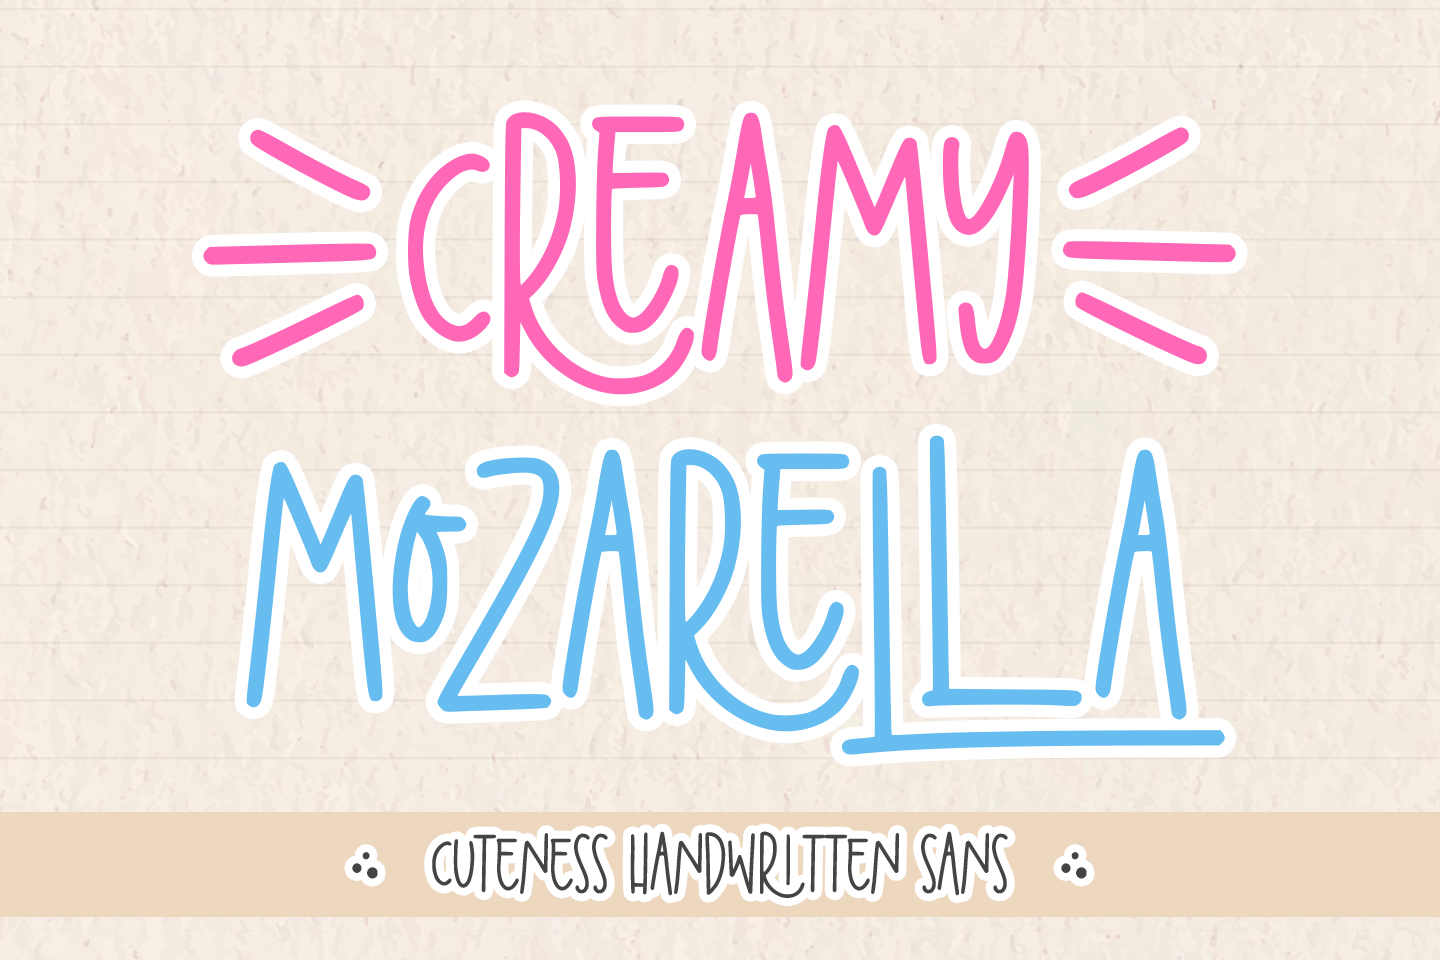 Creamy Mozarella